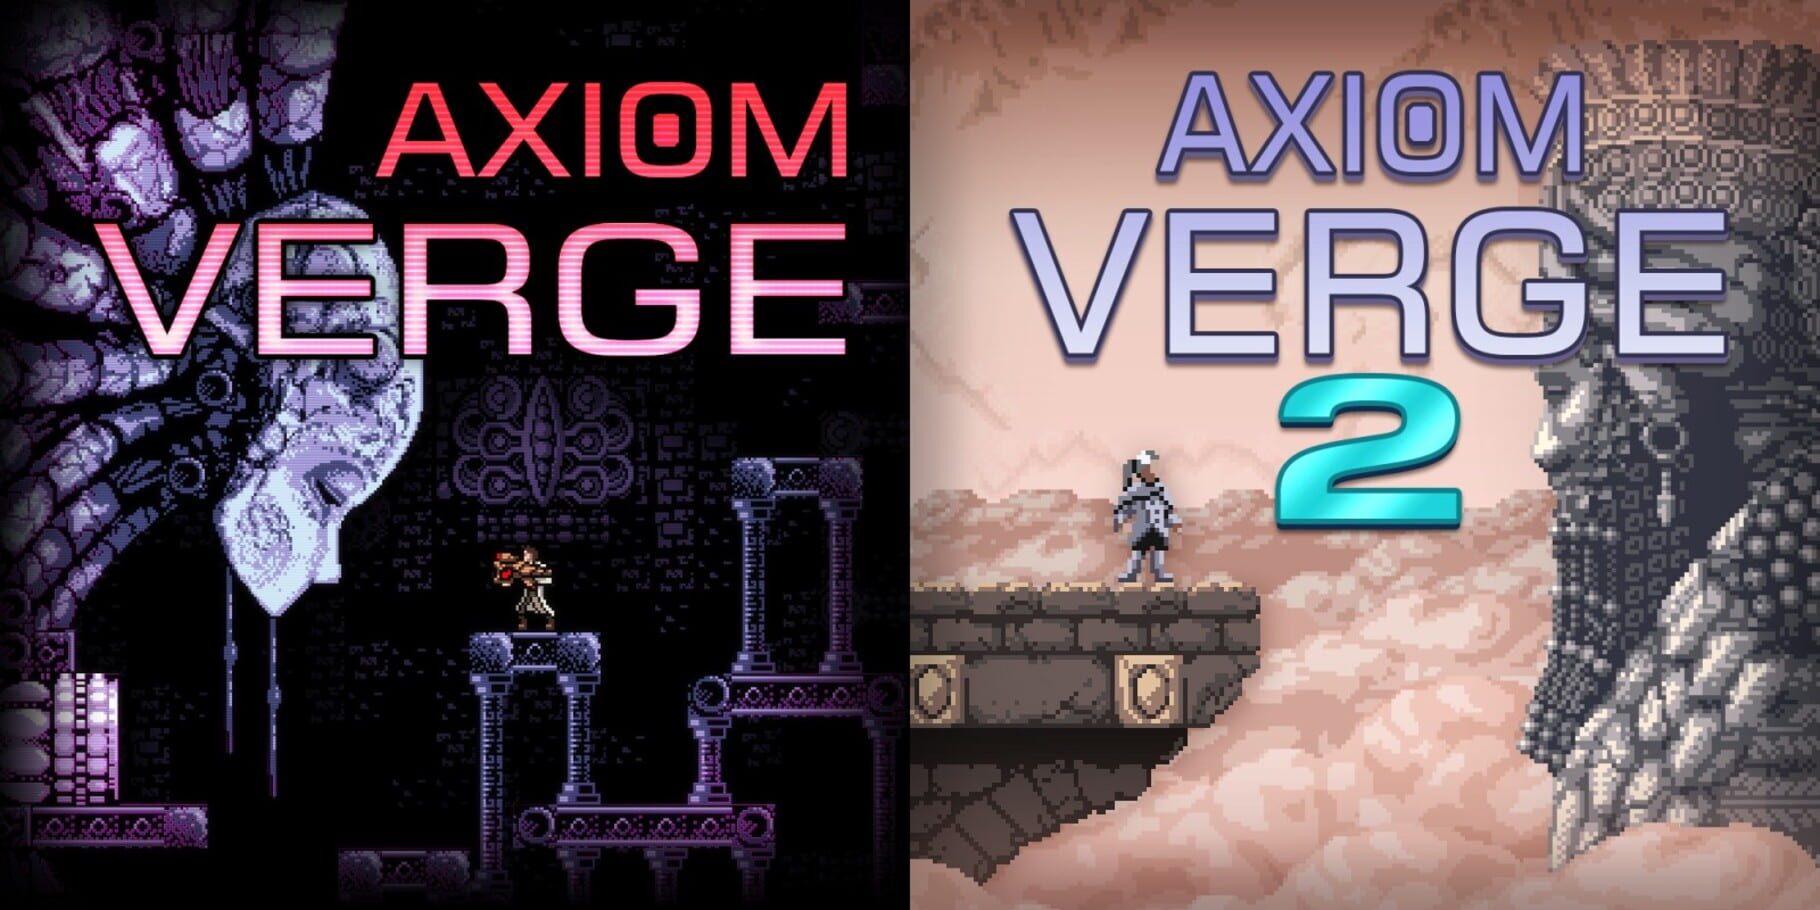 Axiom Verge 1 & 2 Double Pack artwork